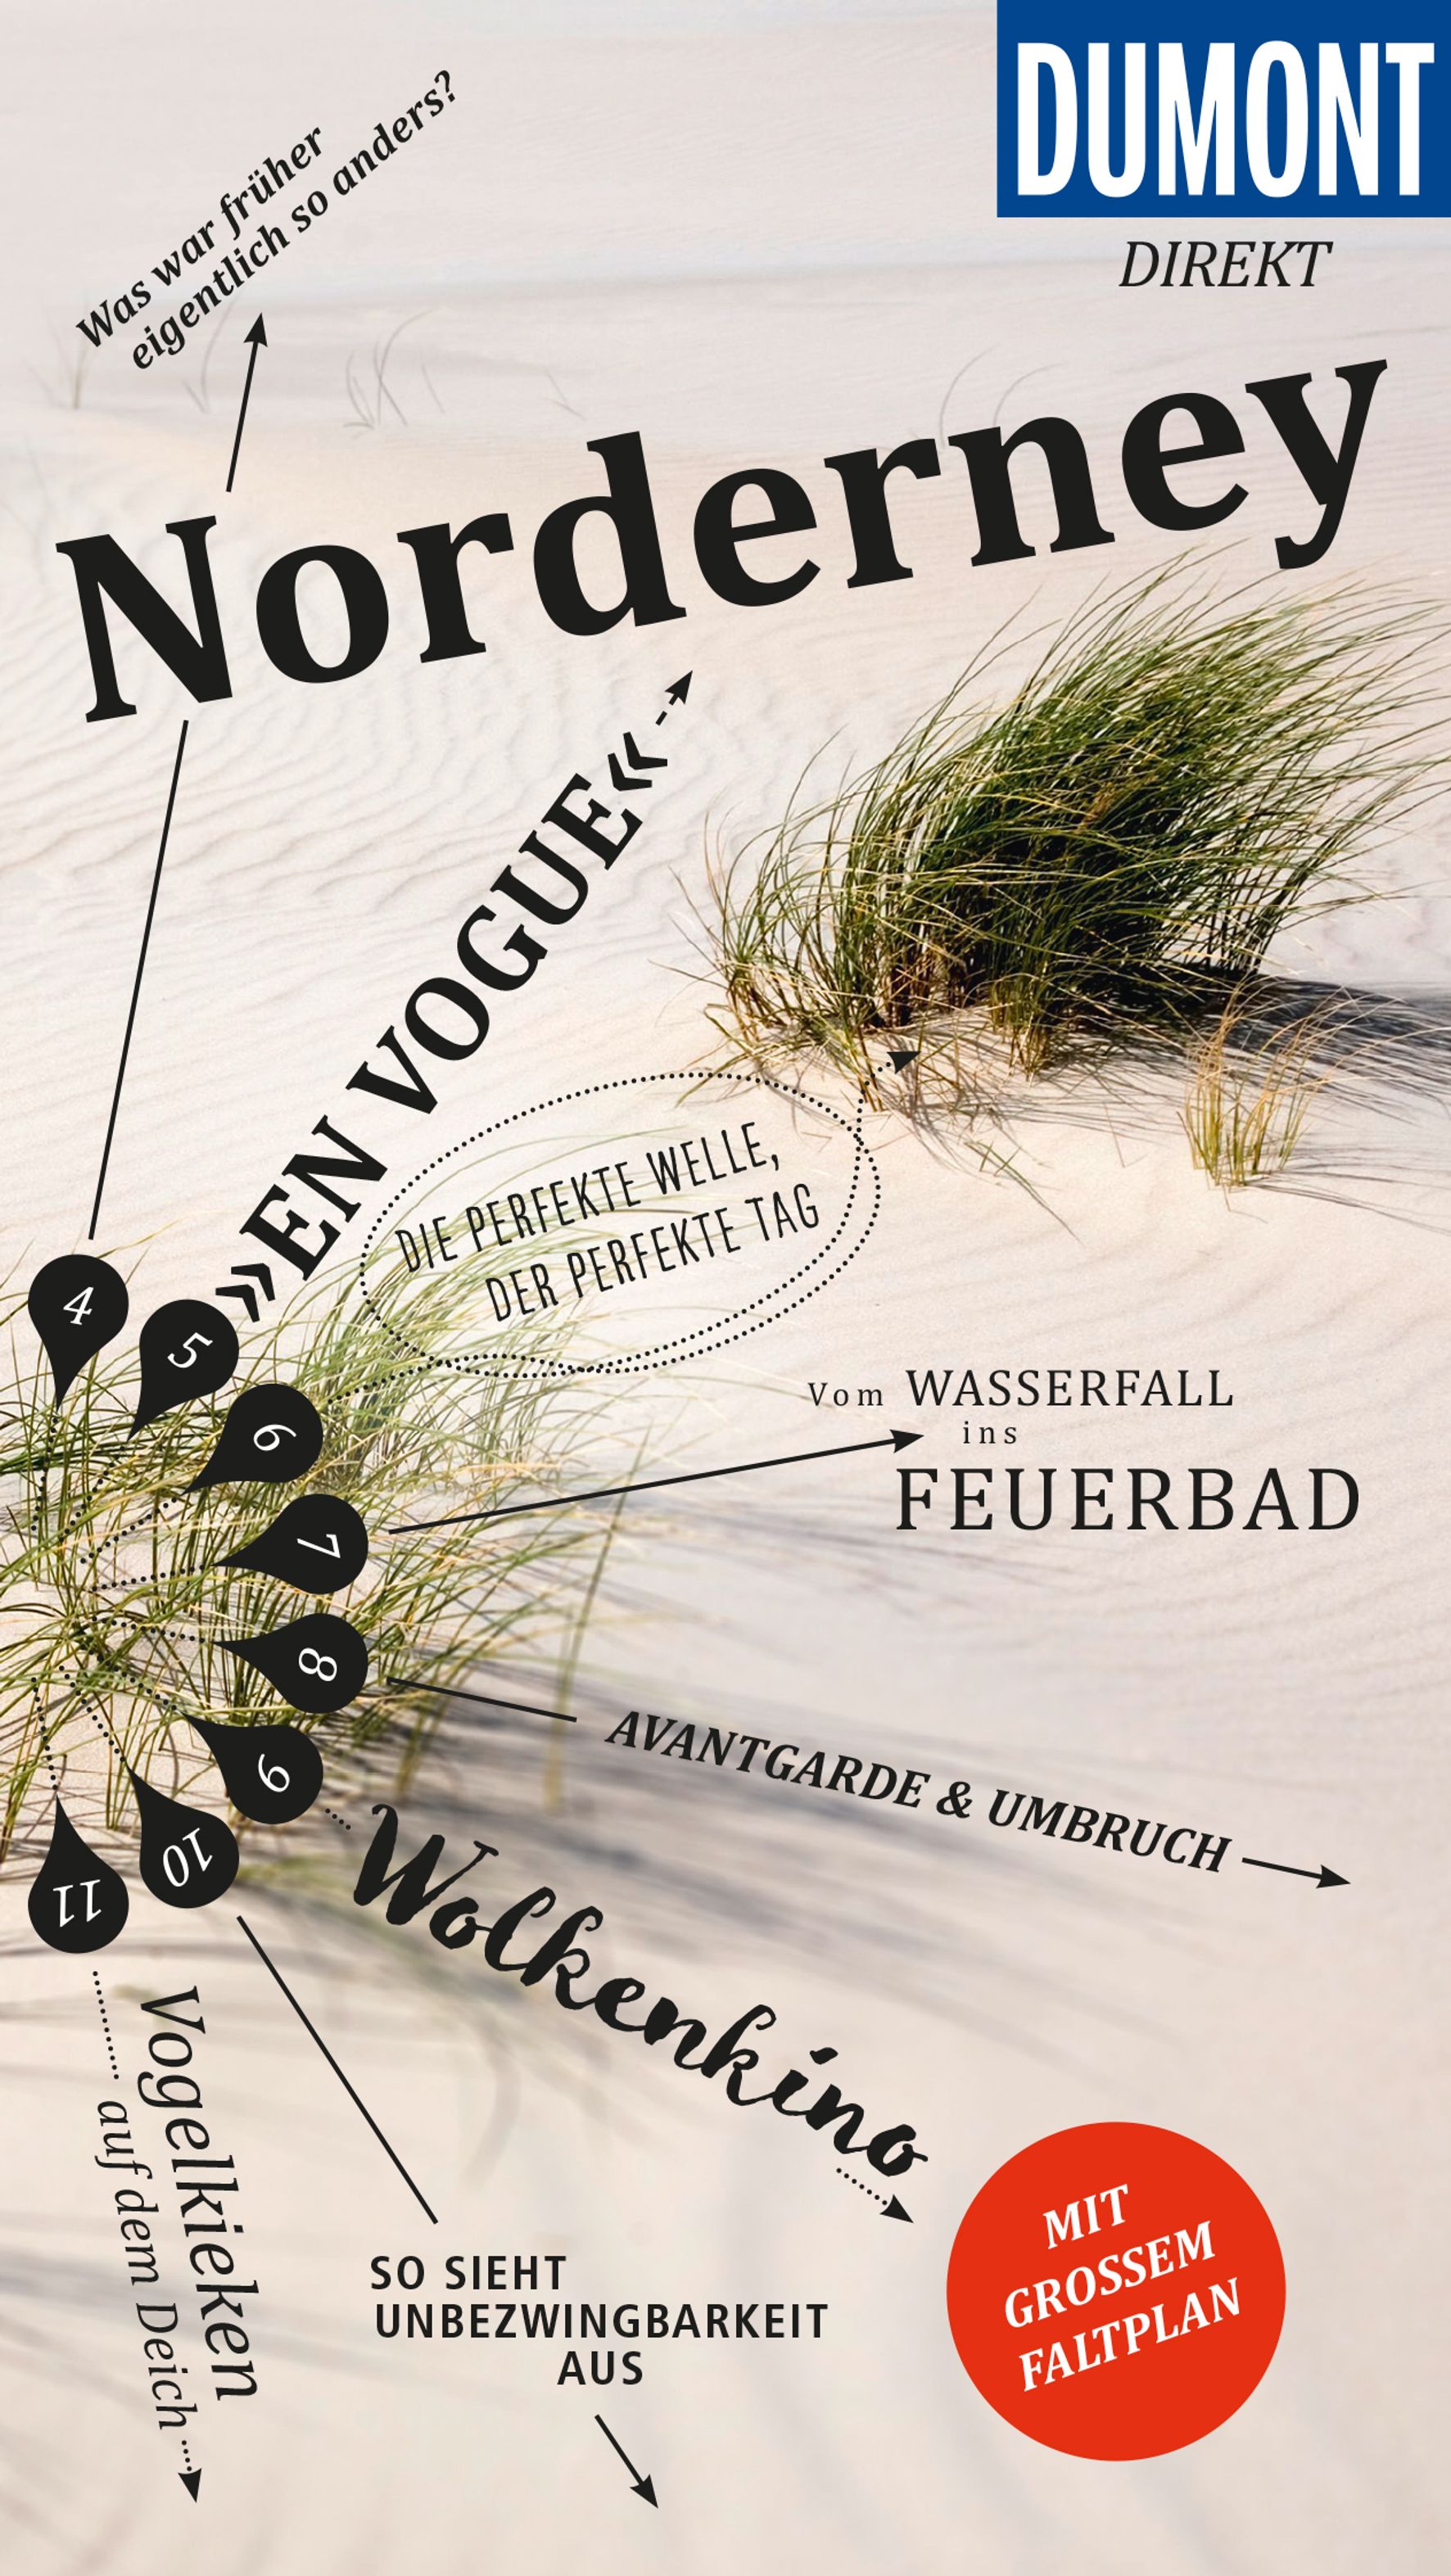 MAIRDUMONT Norderney (eBook)